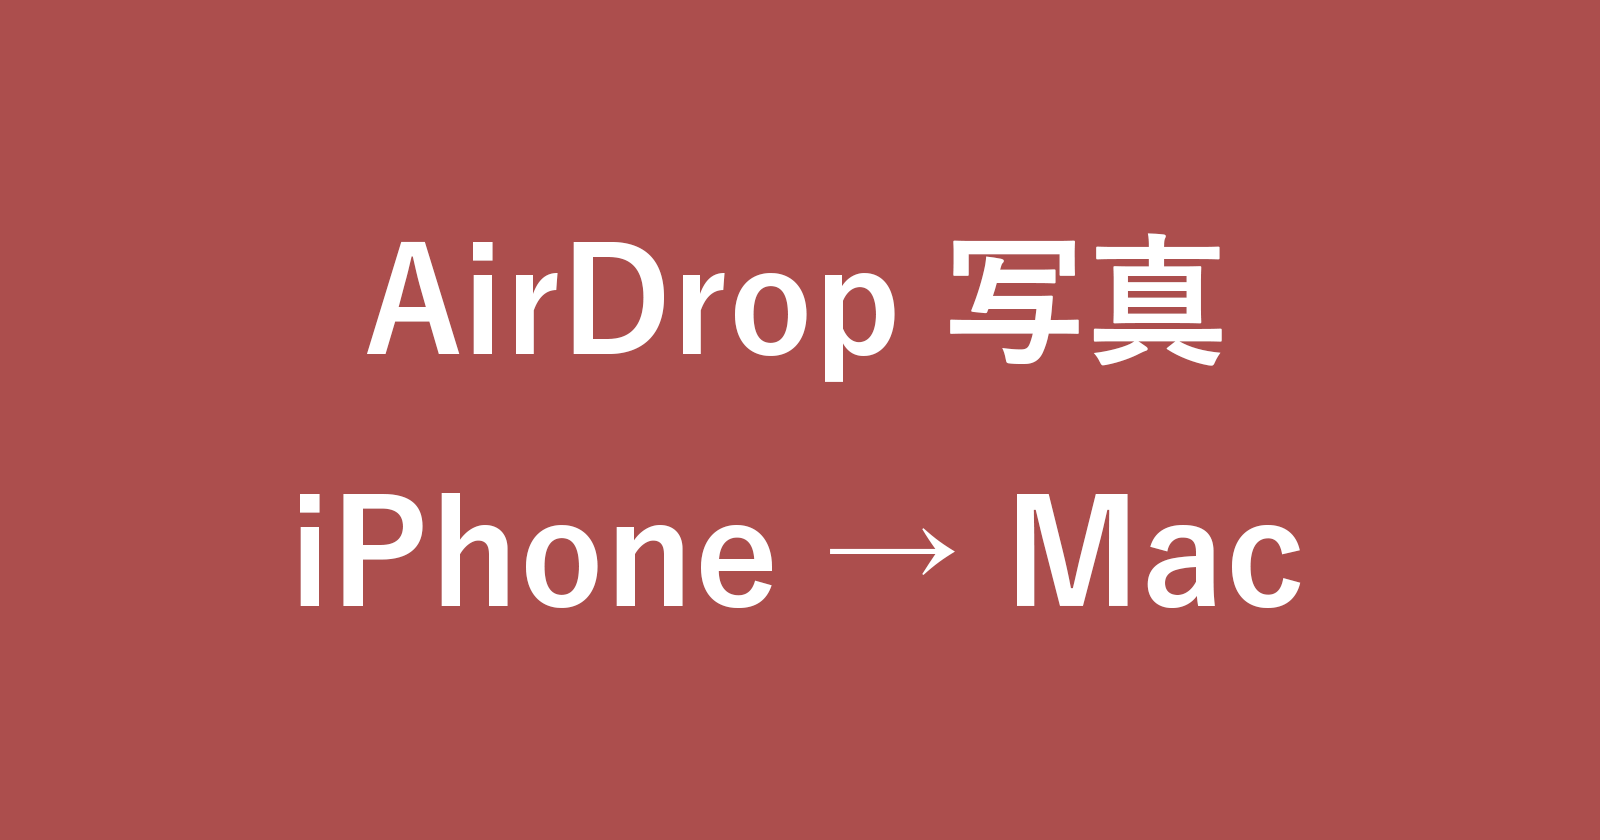 airdrop iphone mac pictures